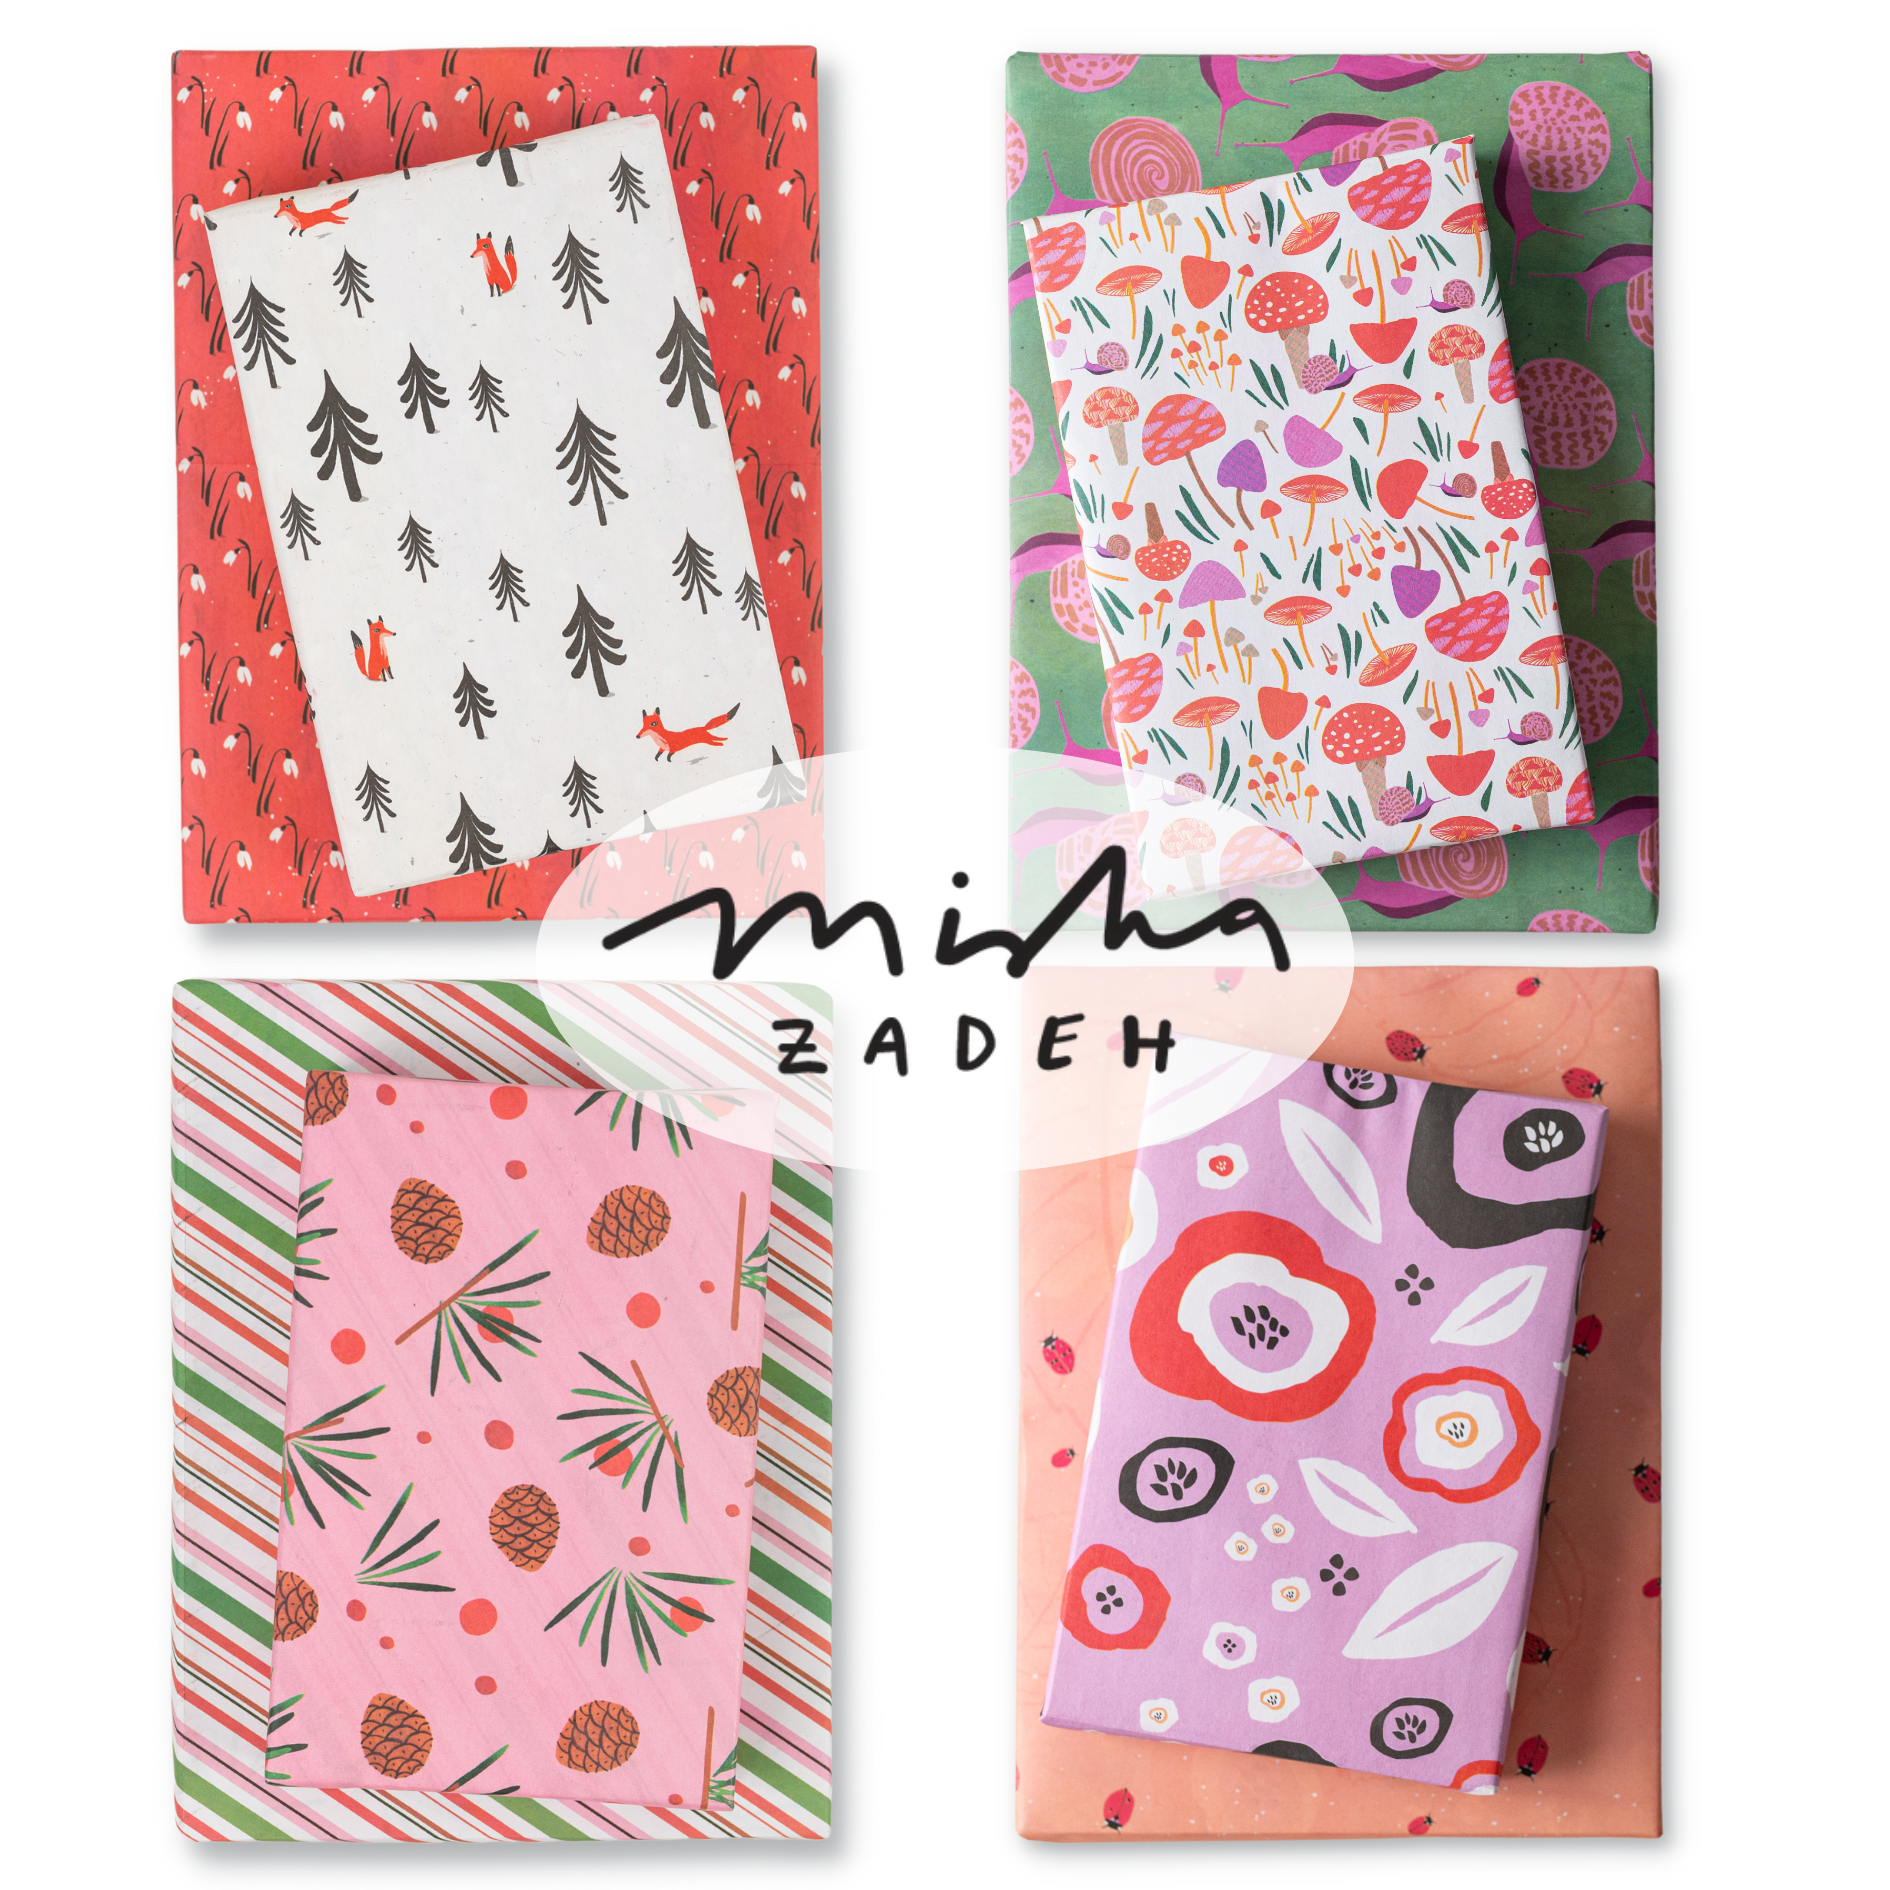 Blush Pink Tissue Paper Bulk Premium Quality and Eco Friendly 